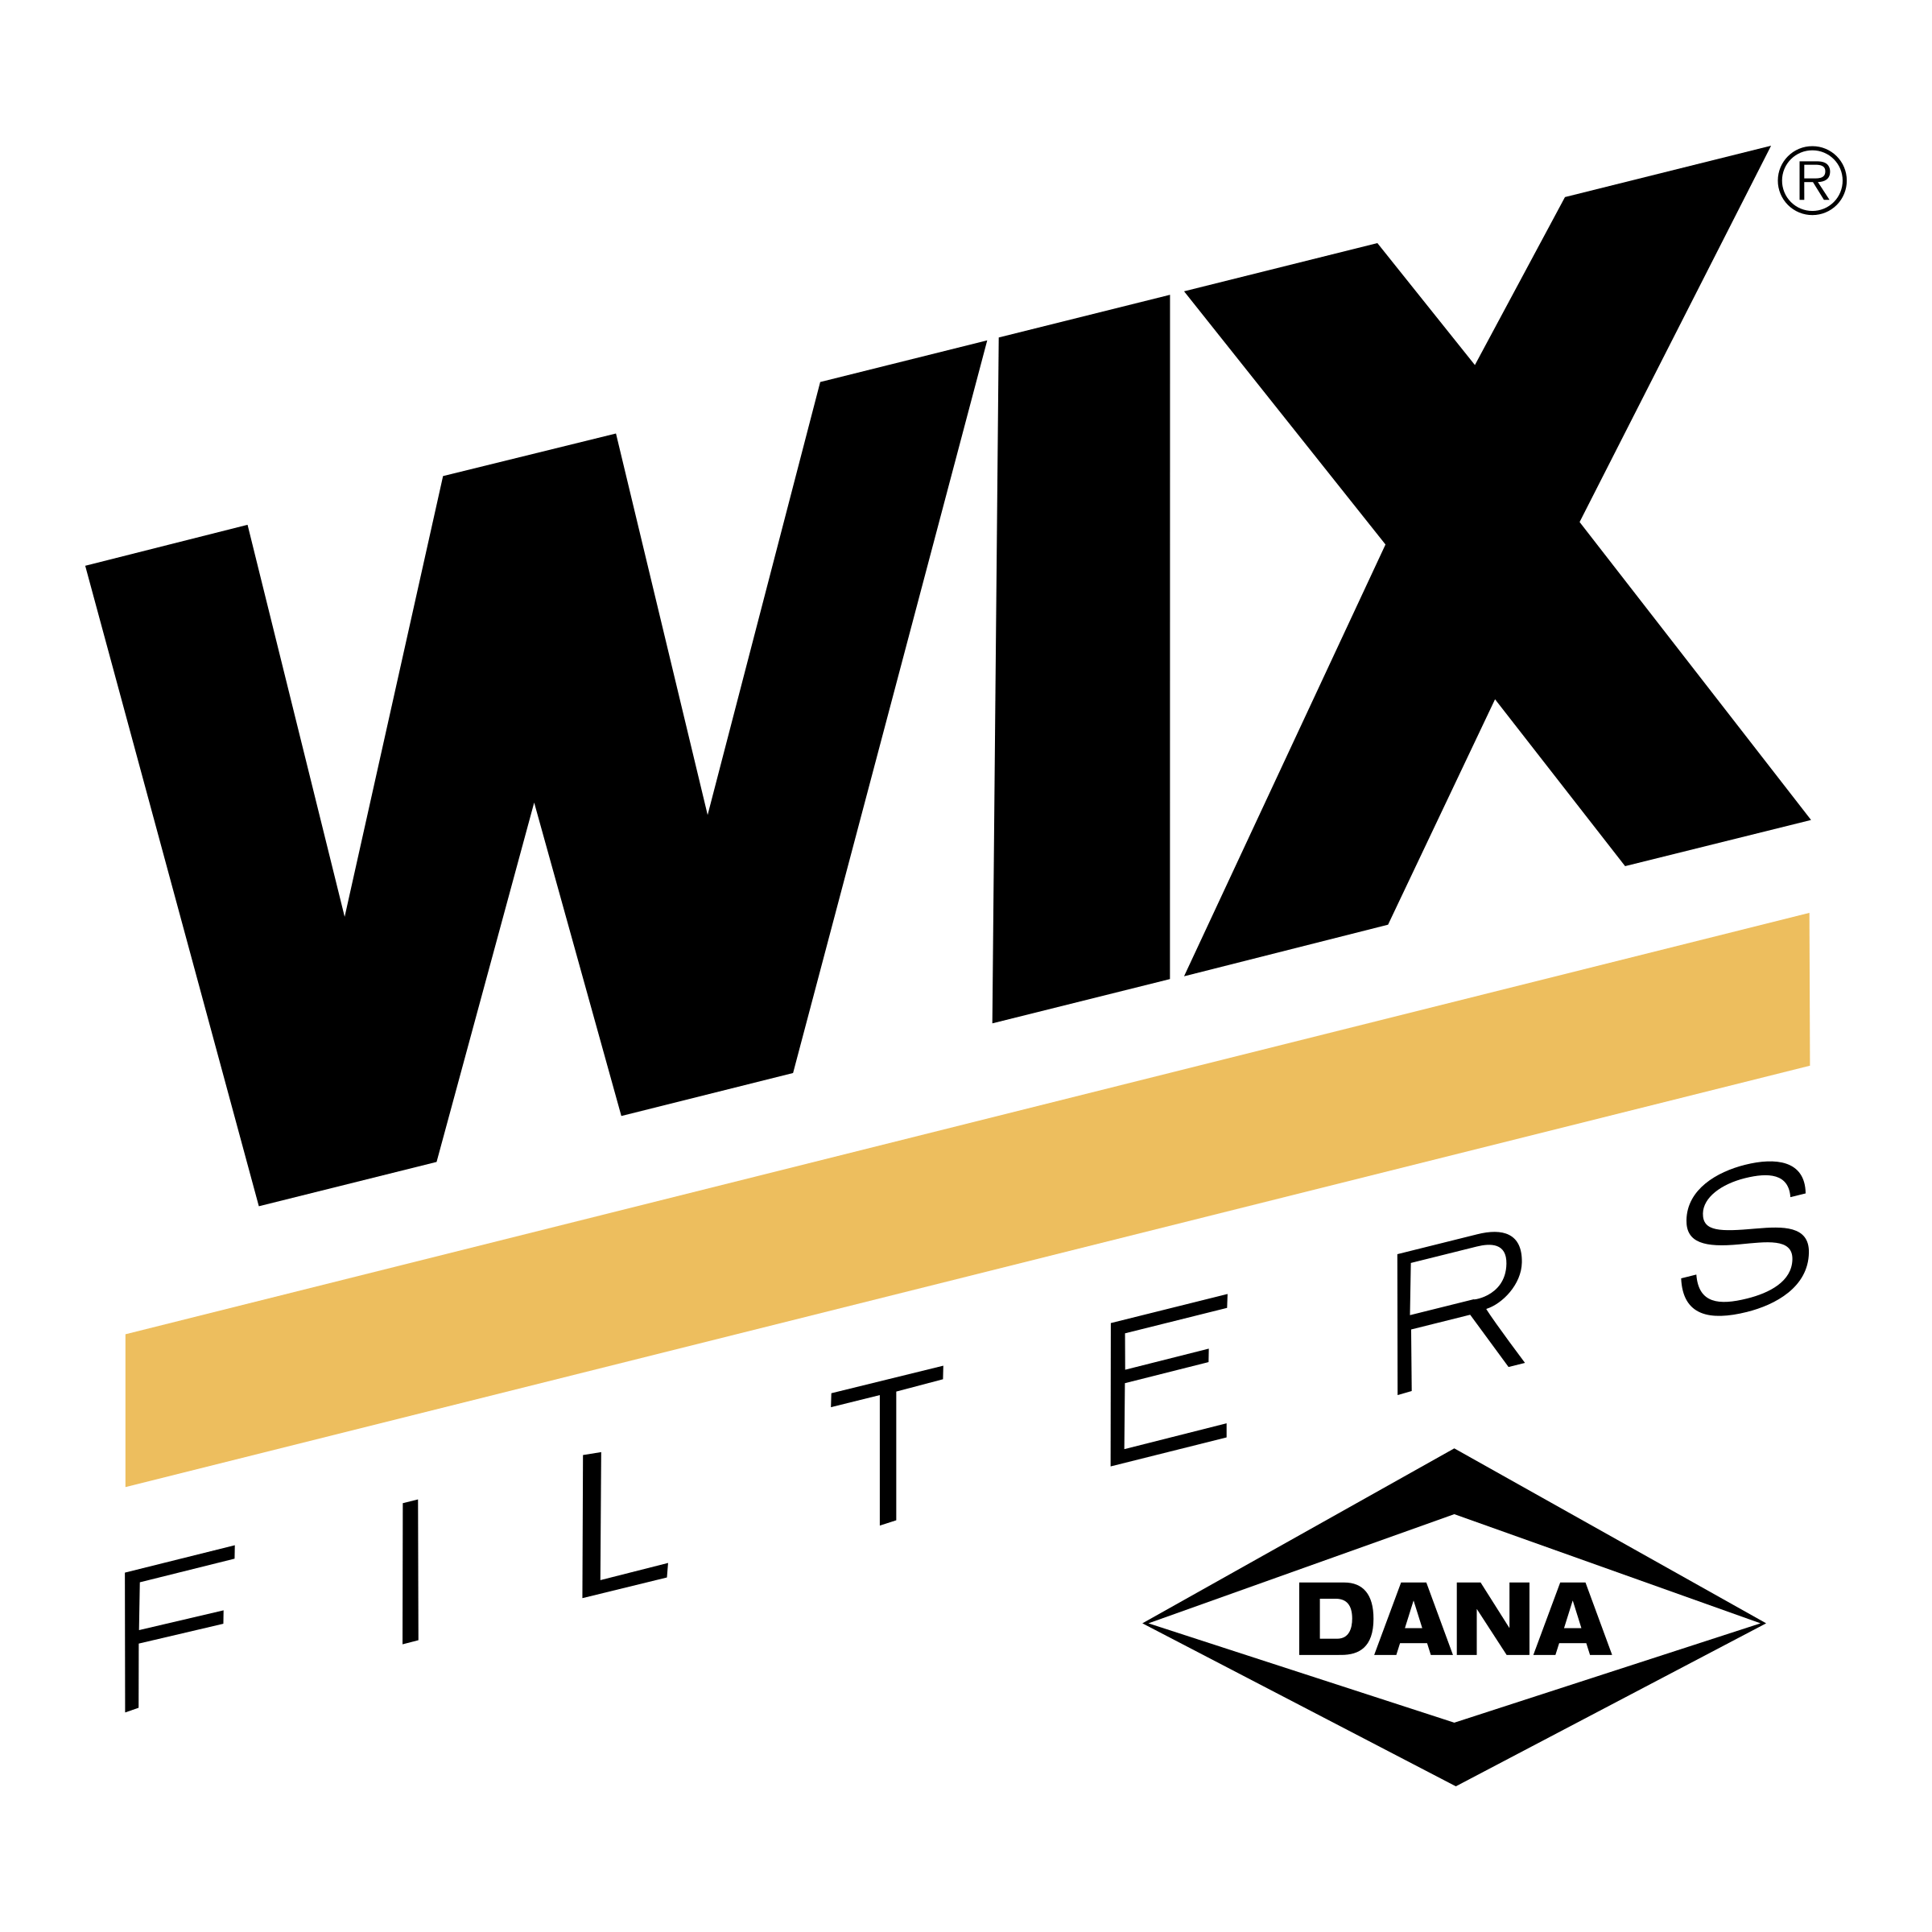 Wacoal Logo - Wix Filters Logo PNG Transparent & SVG Vector